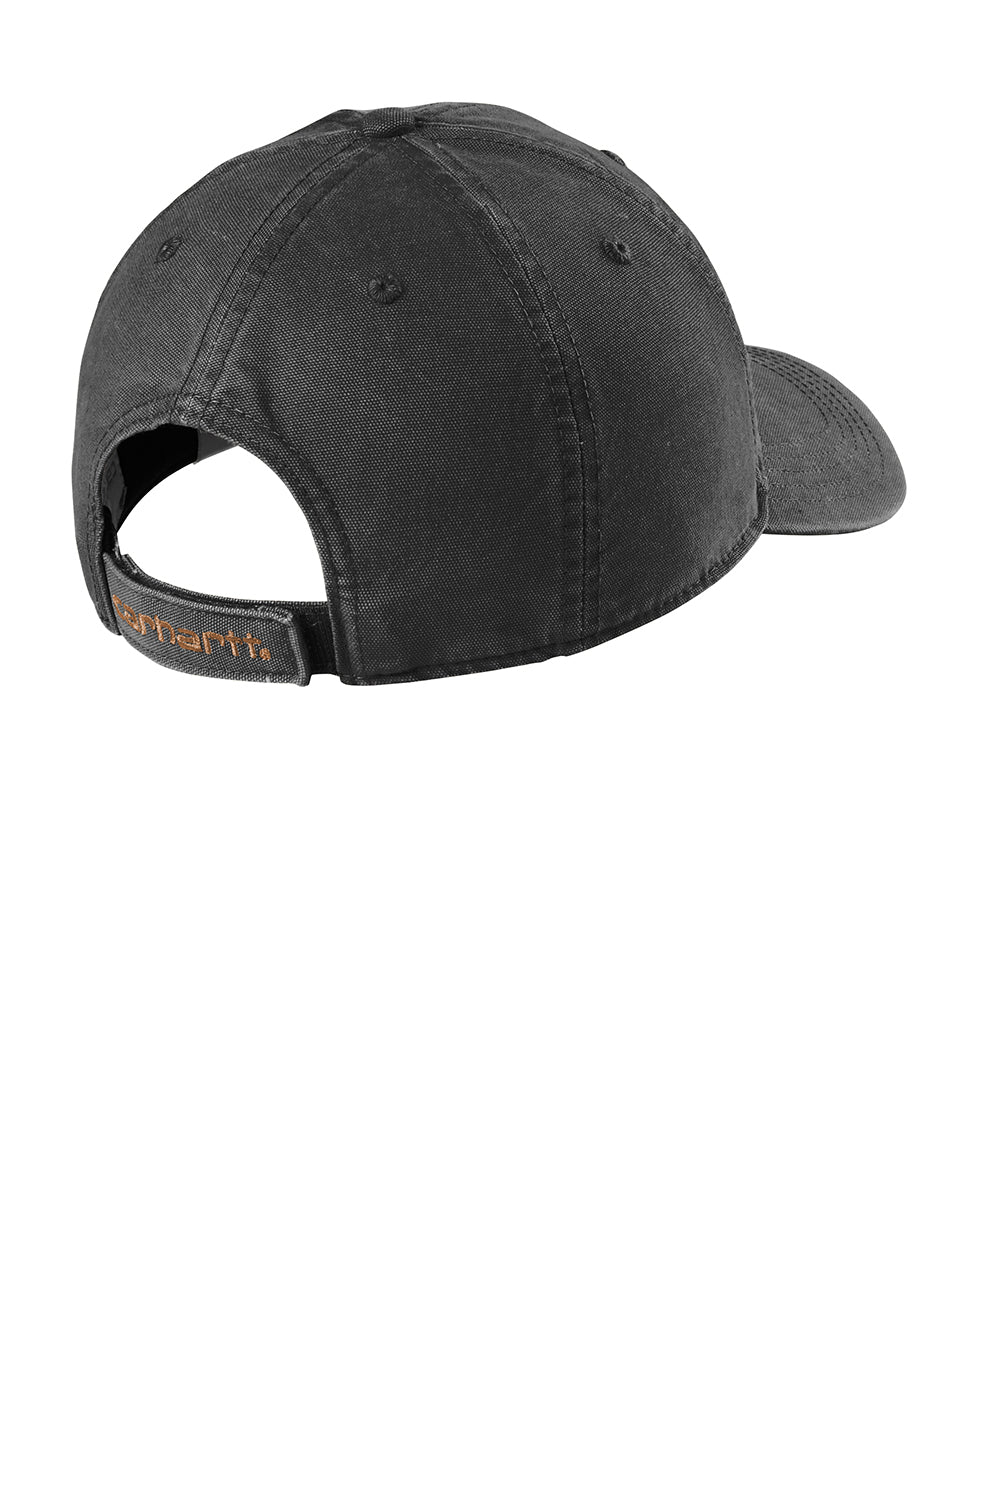 Carhartt CT103938  Moisture Wicking Canvas Adjustable Hat Black Flat Back